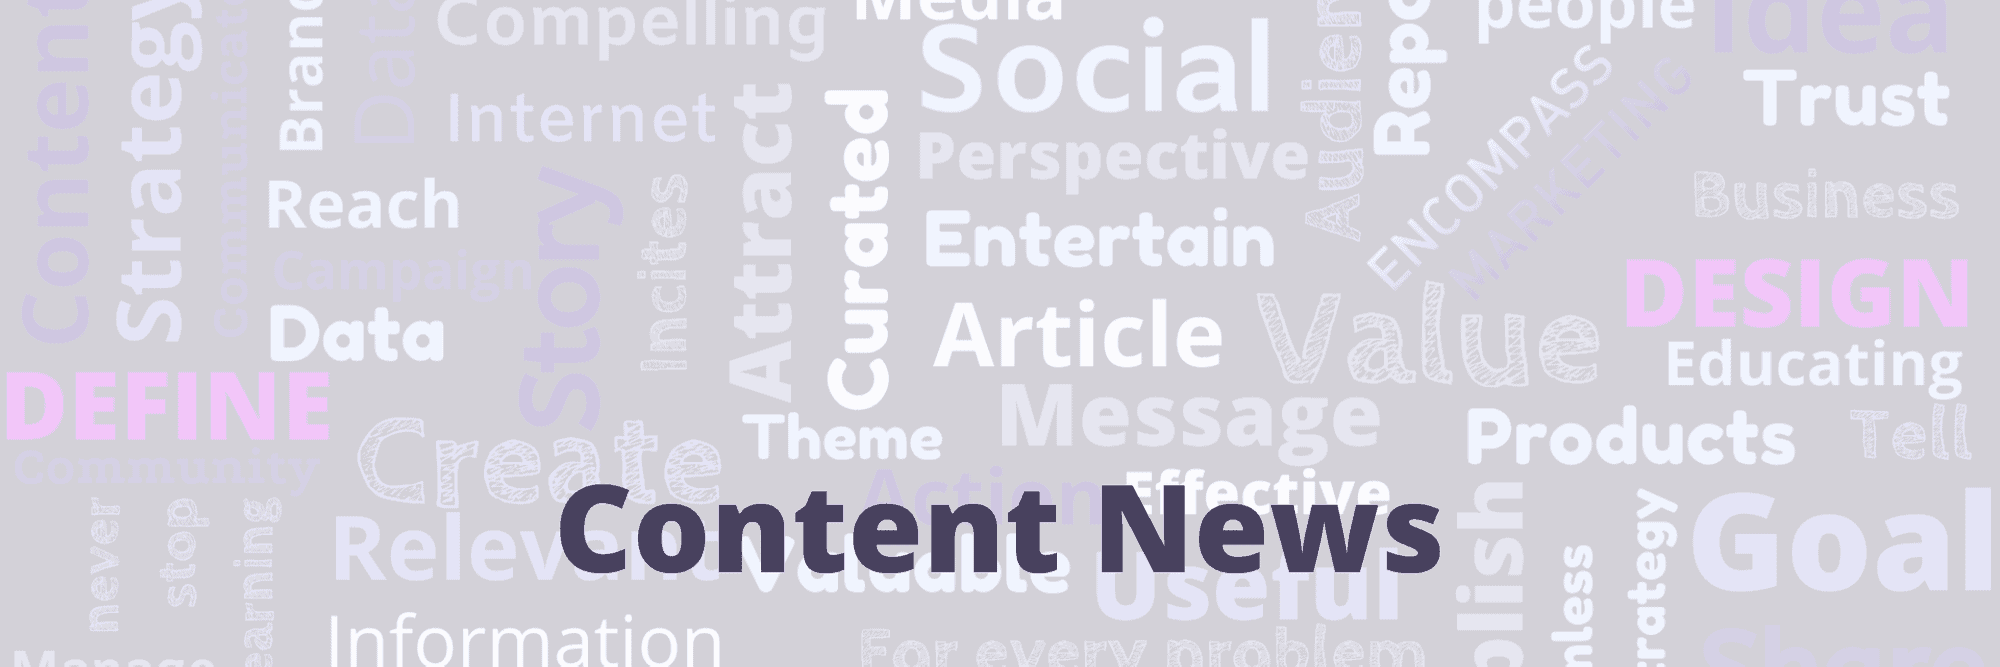 Content News